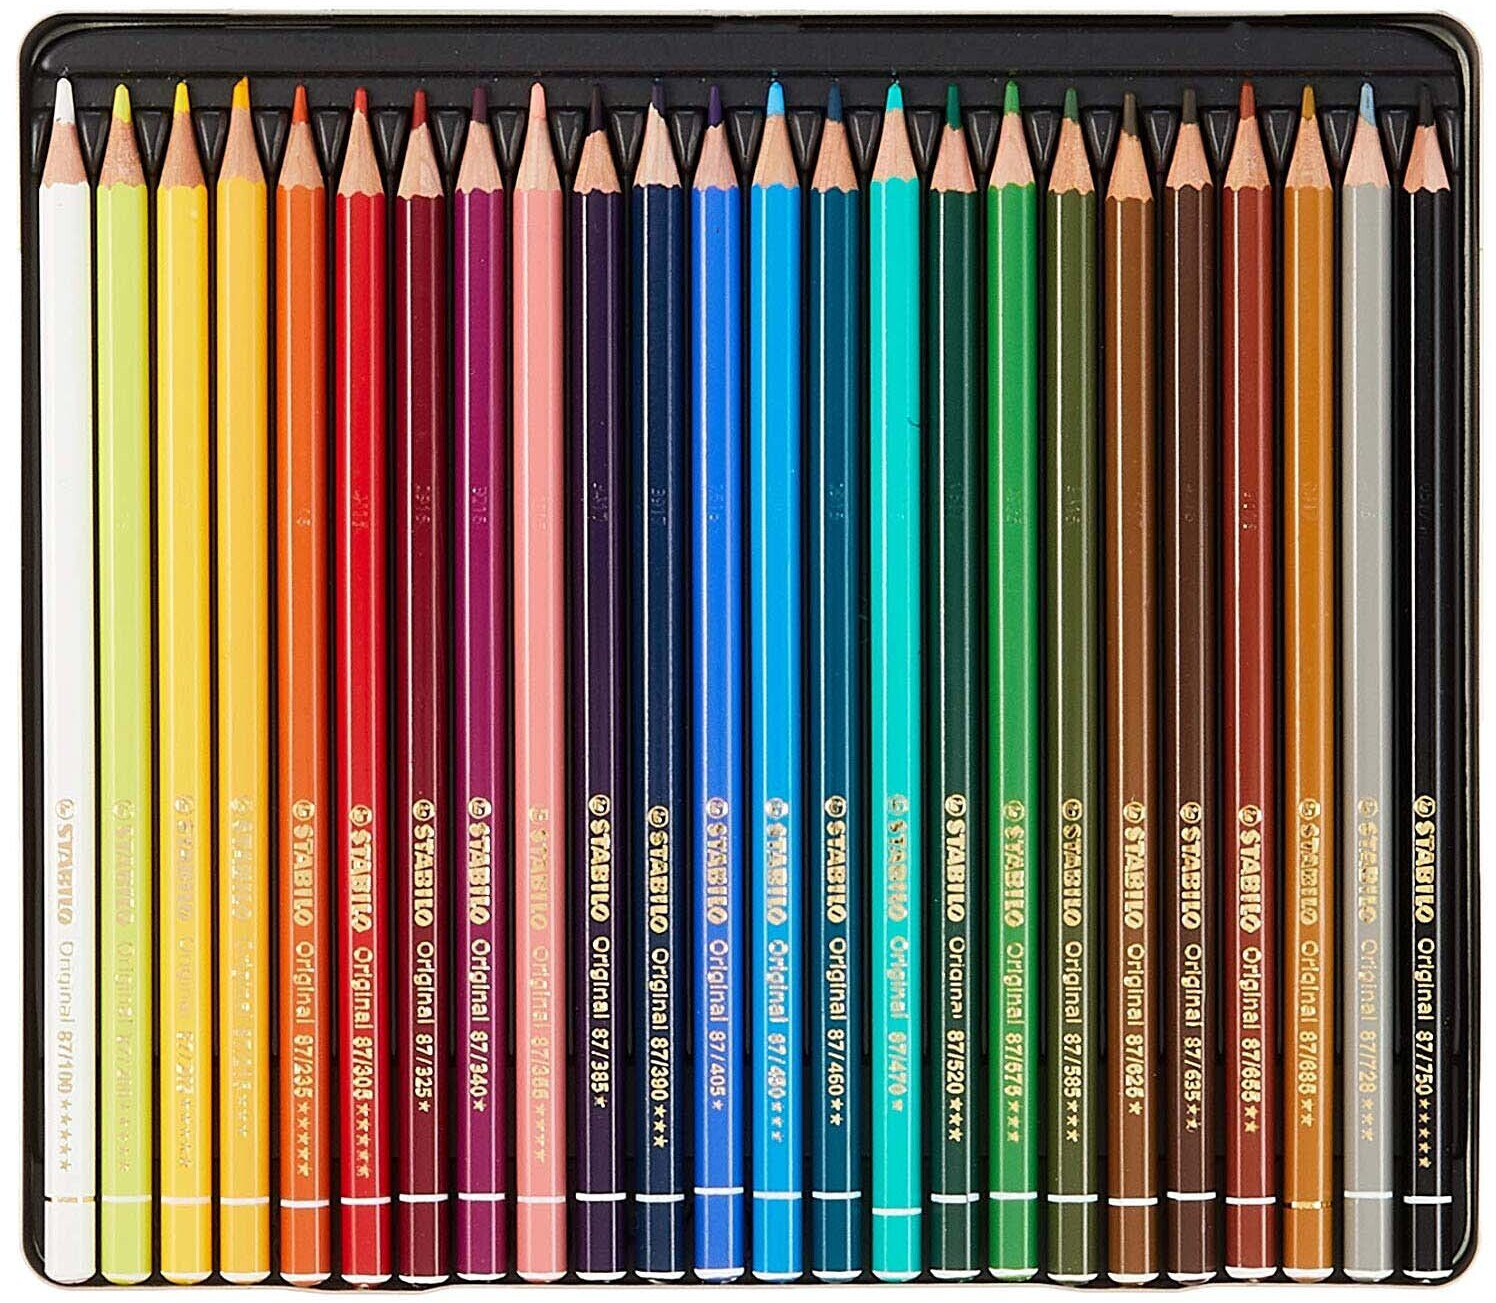 STABILO Original 24 matite colorate a € 26,21 (oggi)